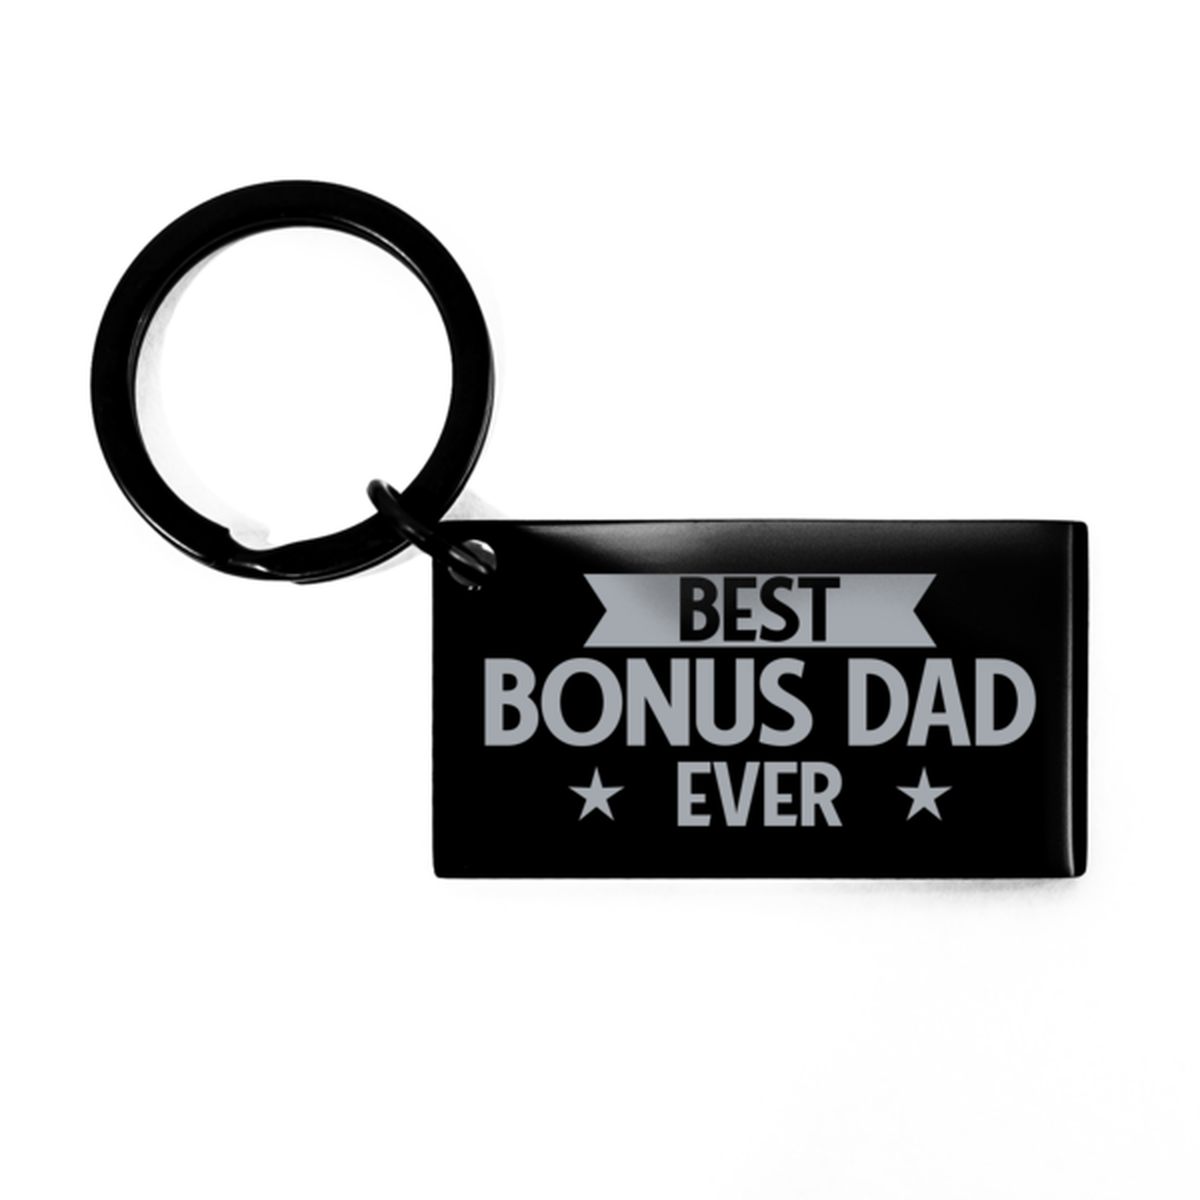 Best Bonus Dad Ever Bonus Dad Gifts, Funny Black Keychain For Bonus Dad, Birthday Engraved Keyring Presents For Men